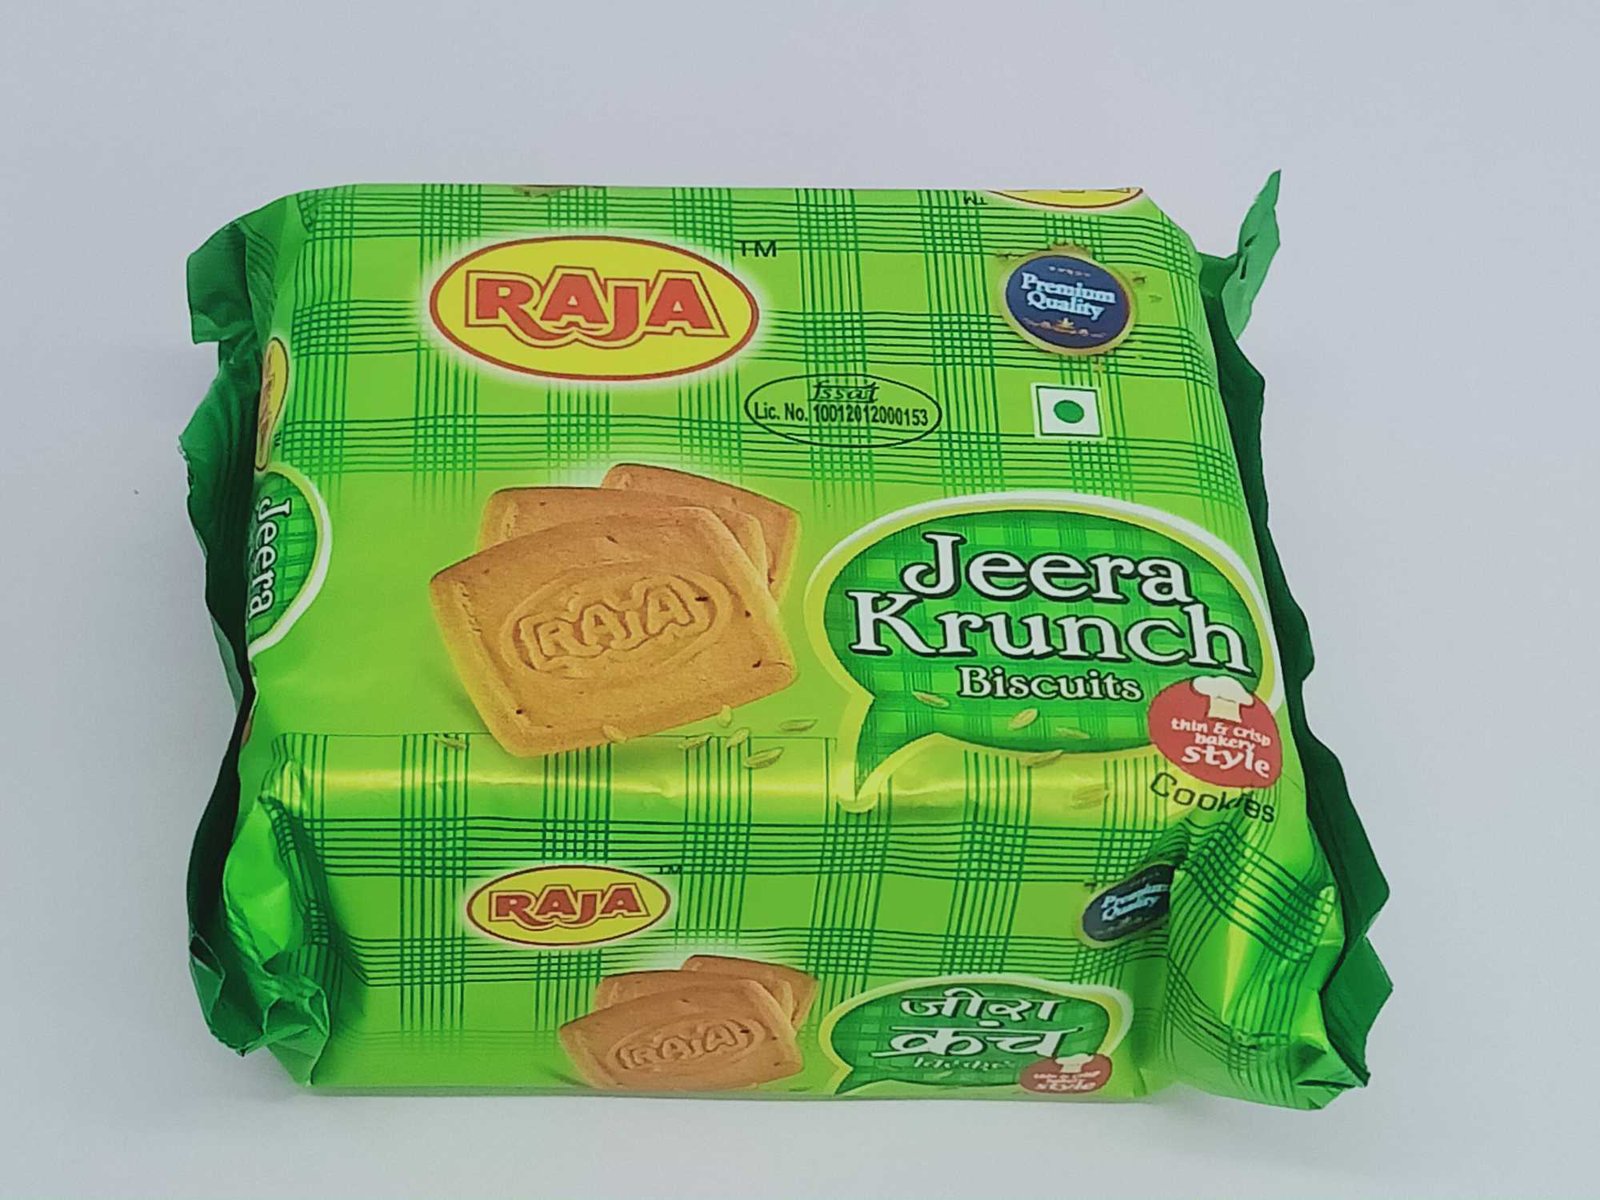 Raja Jeera Krunch Biscuits thiner Crisp Bakery Style Cookies, 90 gram